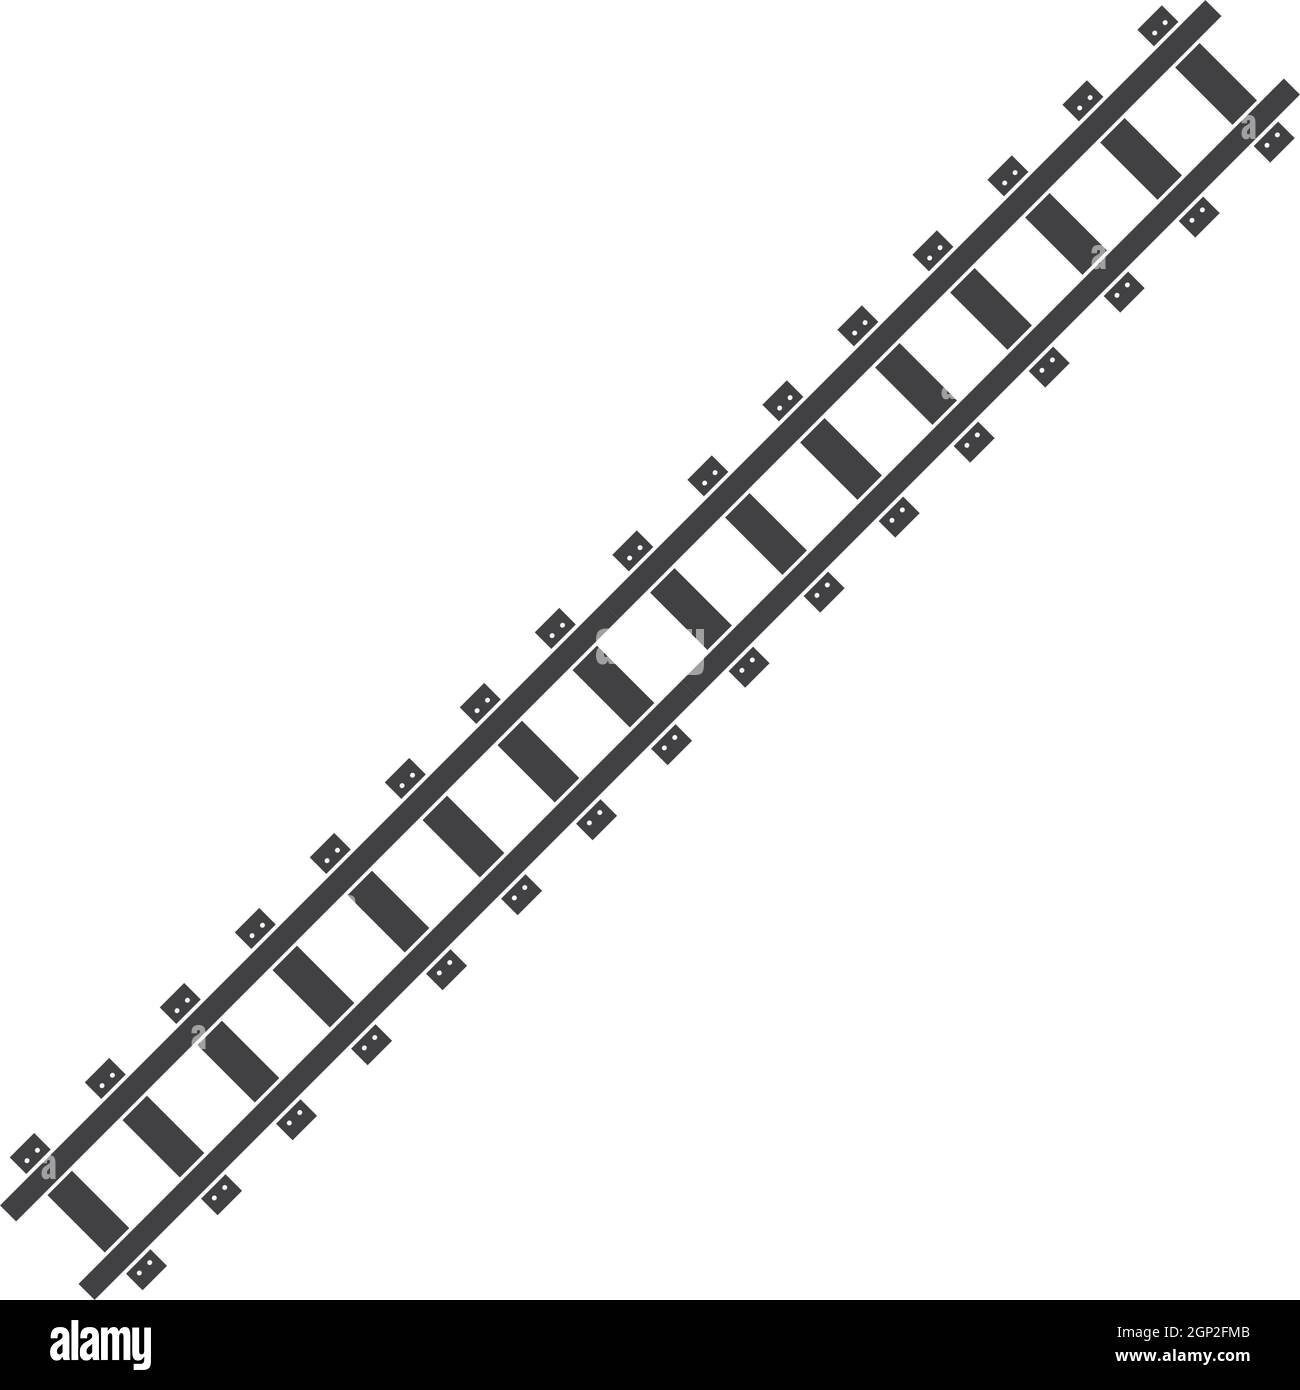 rail way track vector illustration design Stock Vector